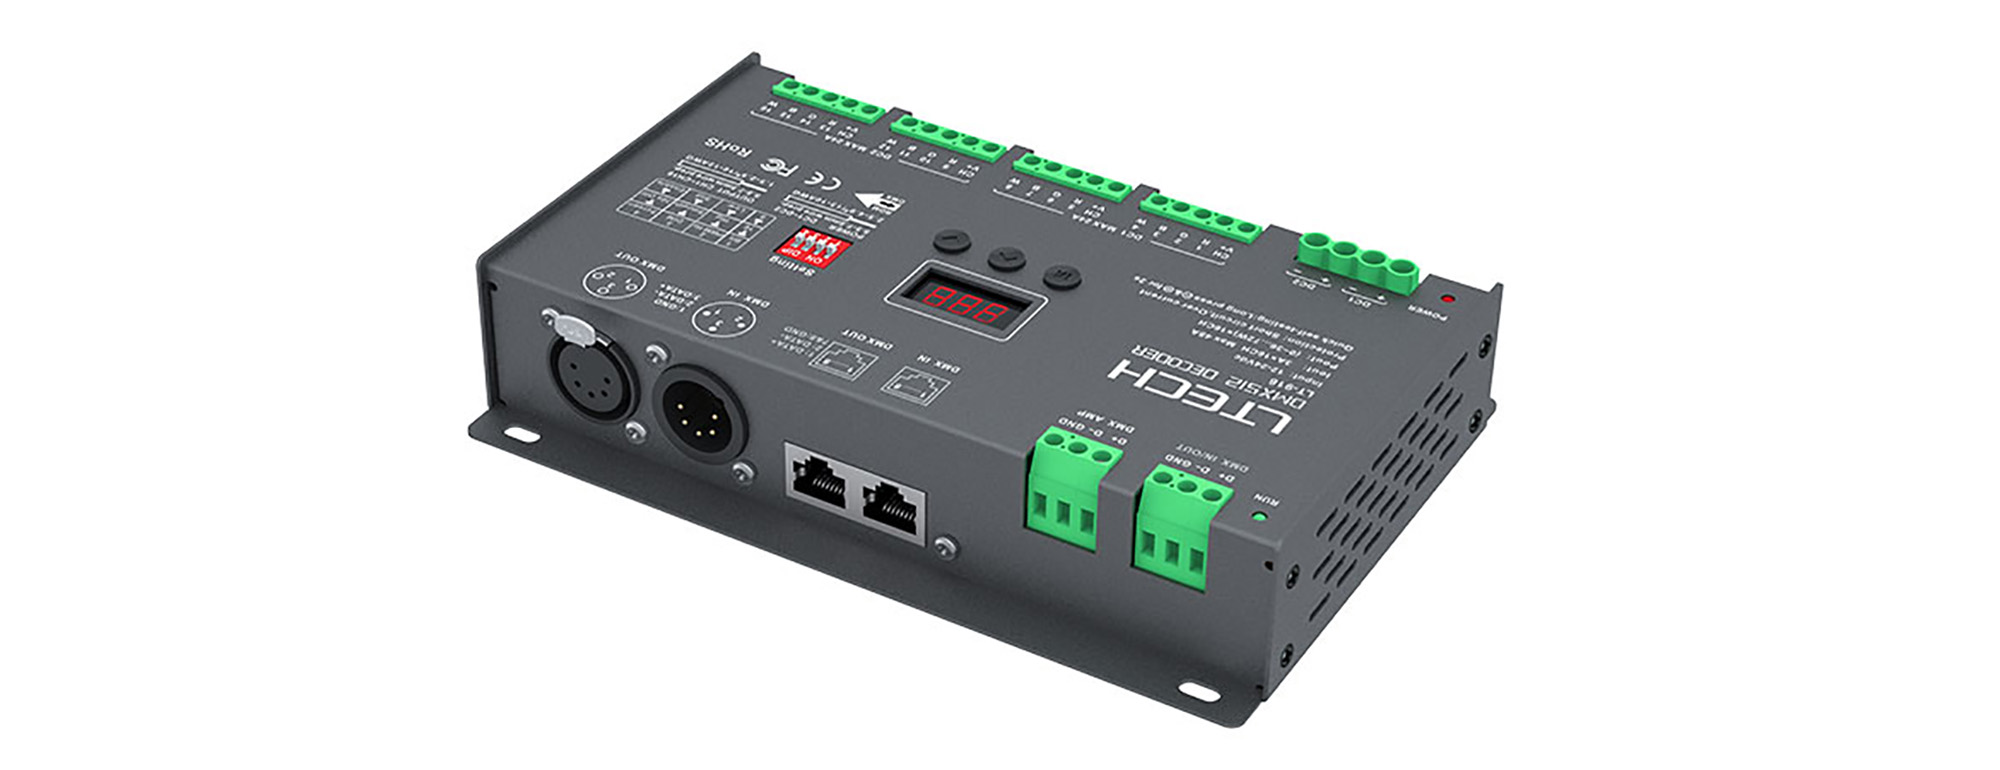 916  16Ch 3A CV DMX Decoder, 1152W Max.Power, XLR-3 , Green connector & RJ45 Port, Self testing, DMX512/RDM I/P signal, IP20.